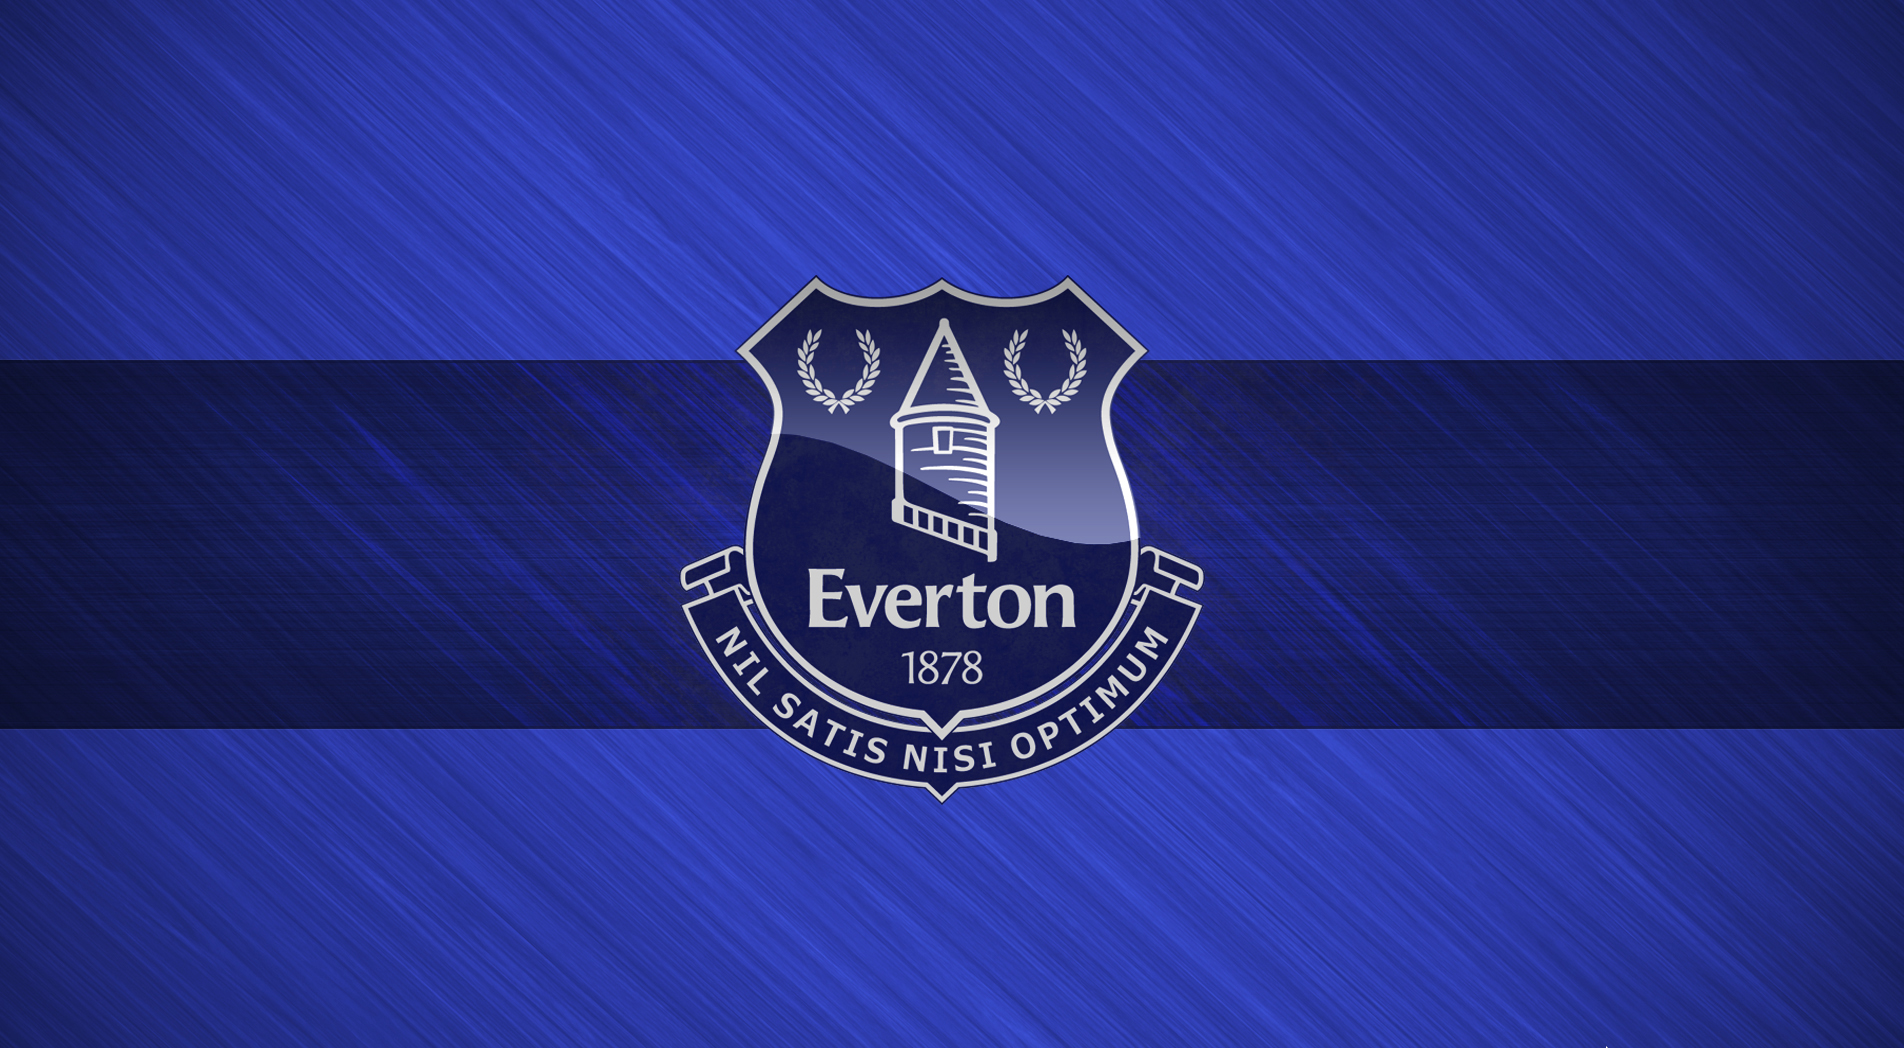 Everton Backgrounds Download Free | PixelsTalk.Net